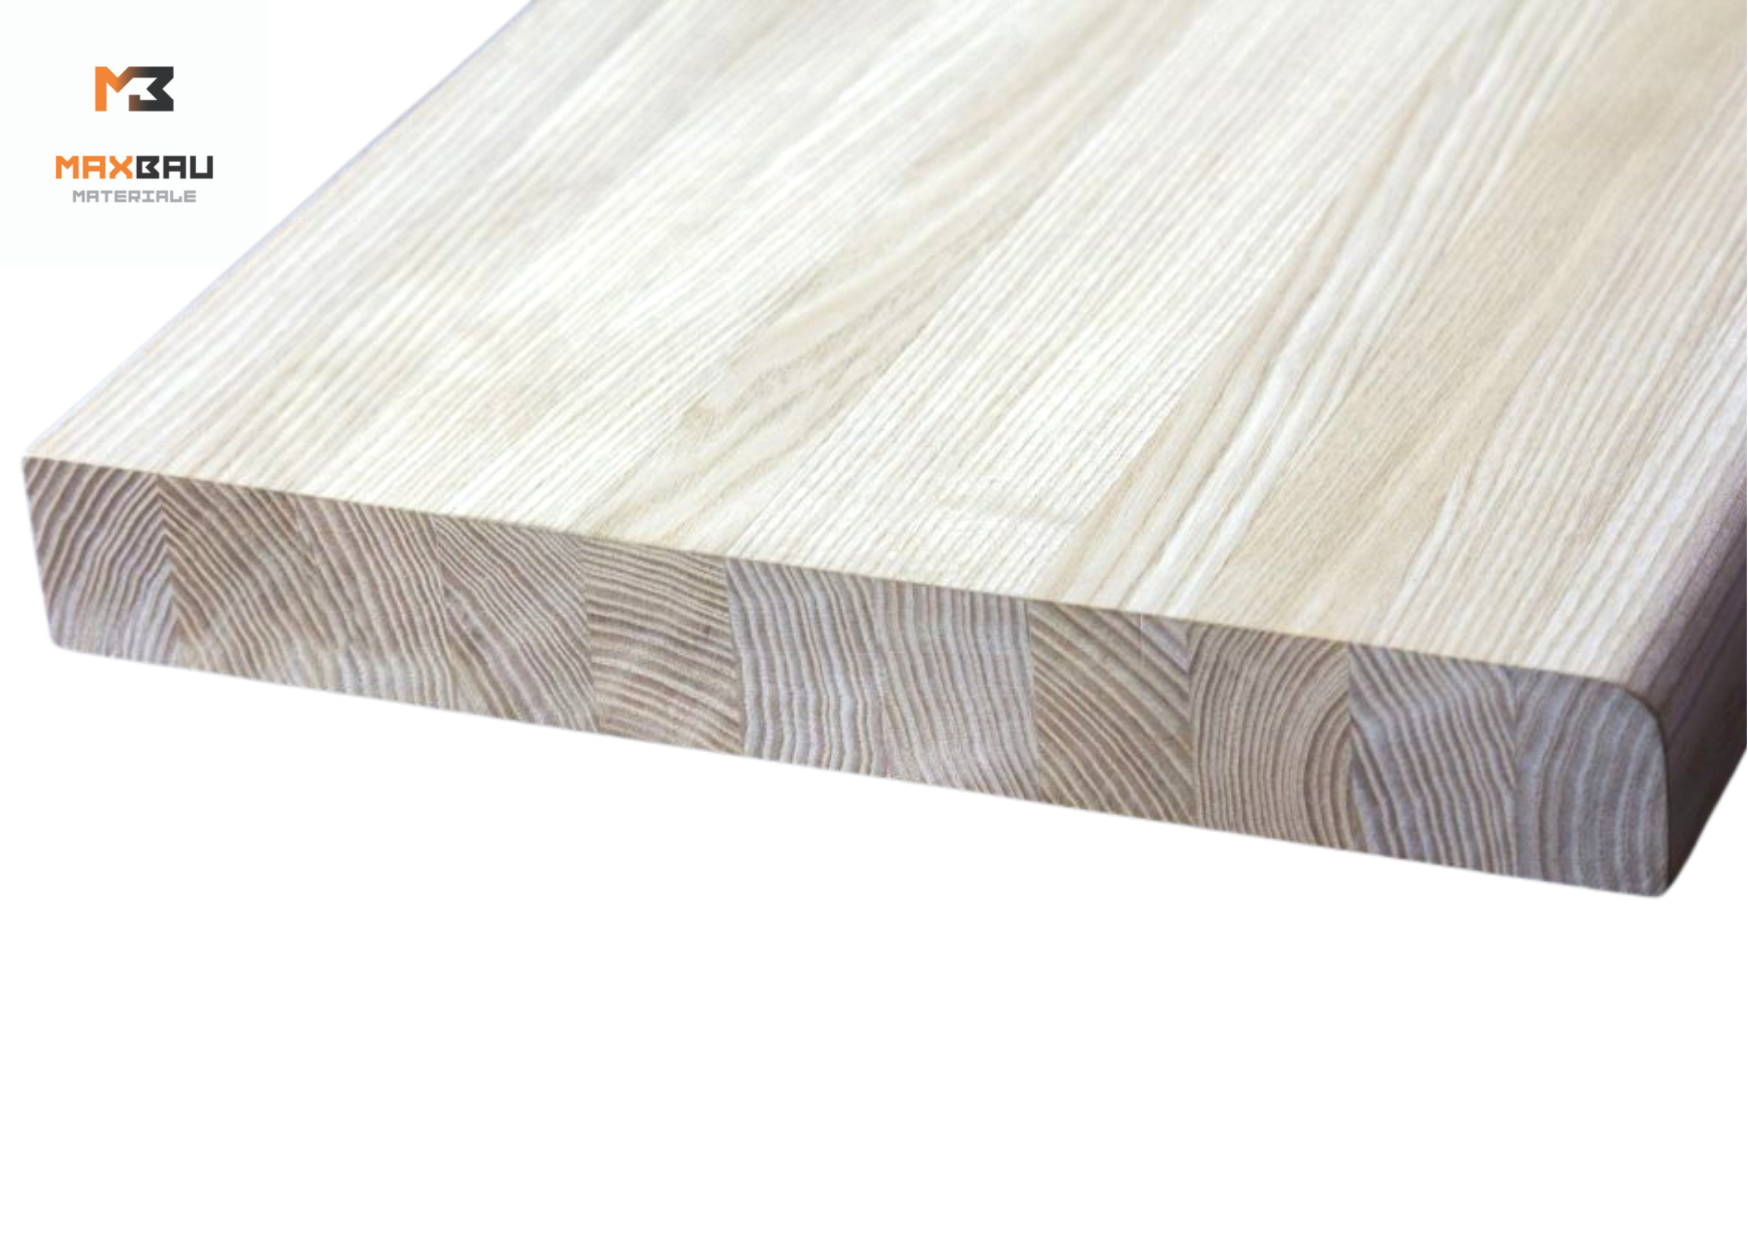 Plates of glued wood - MaxBau wooden plate glued 2000 x 600 x 28 mm class AB, https:maxbau.ro